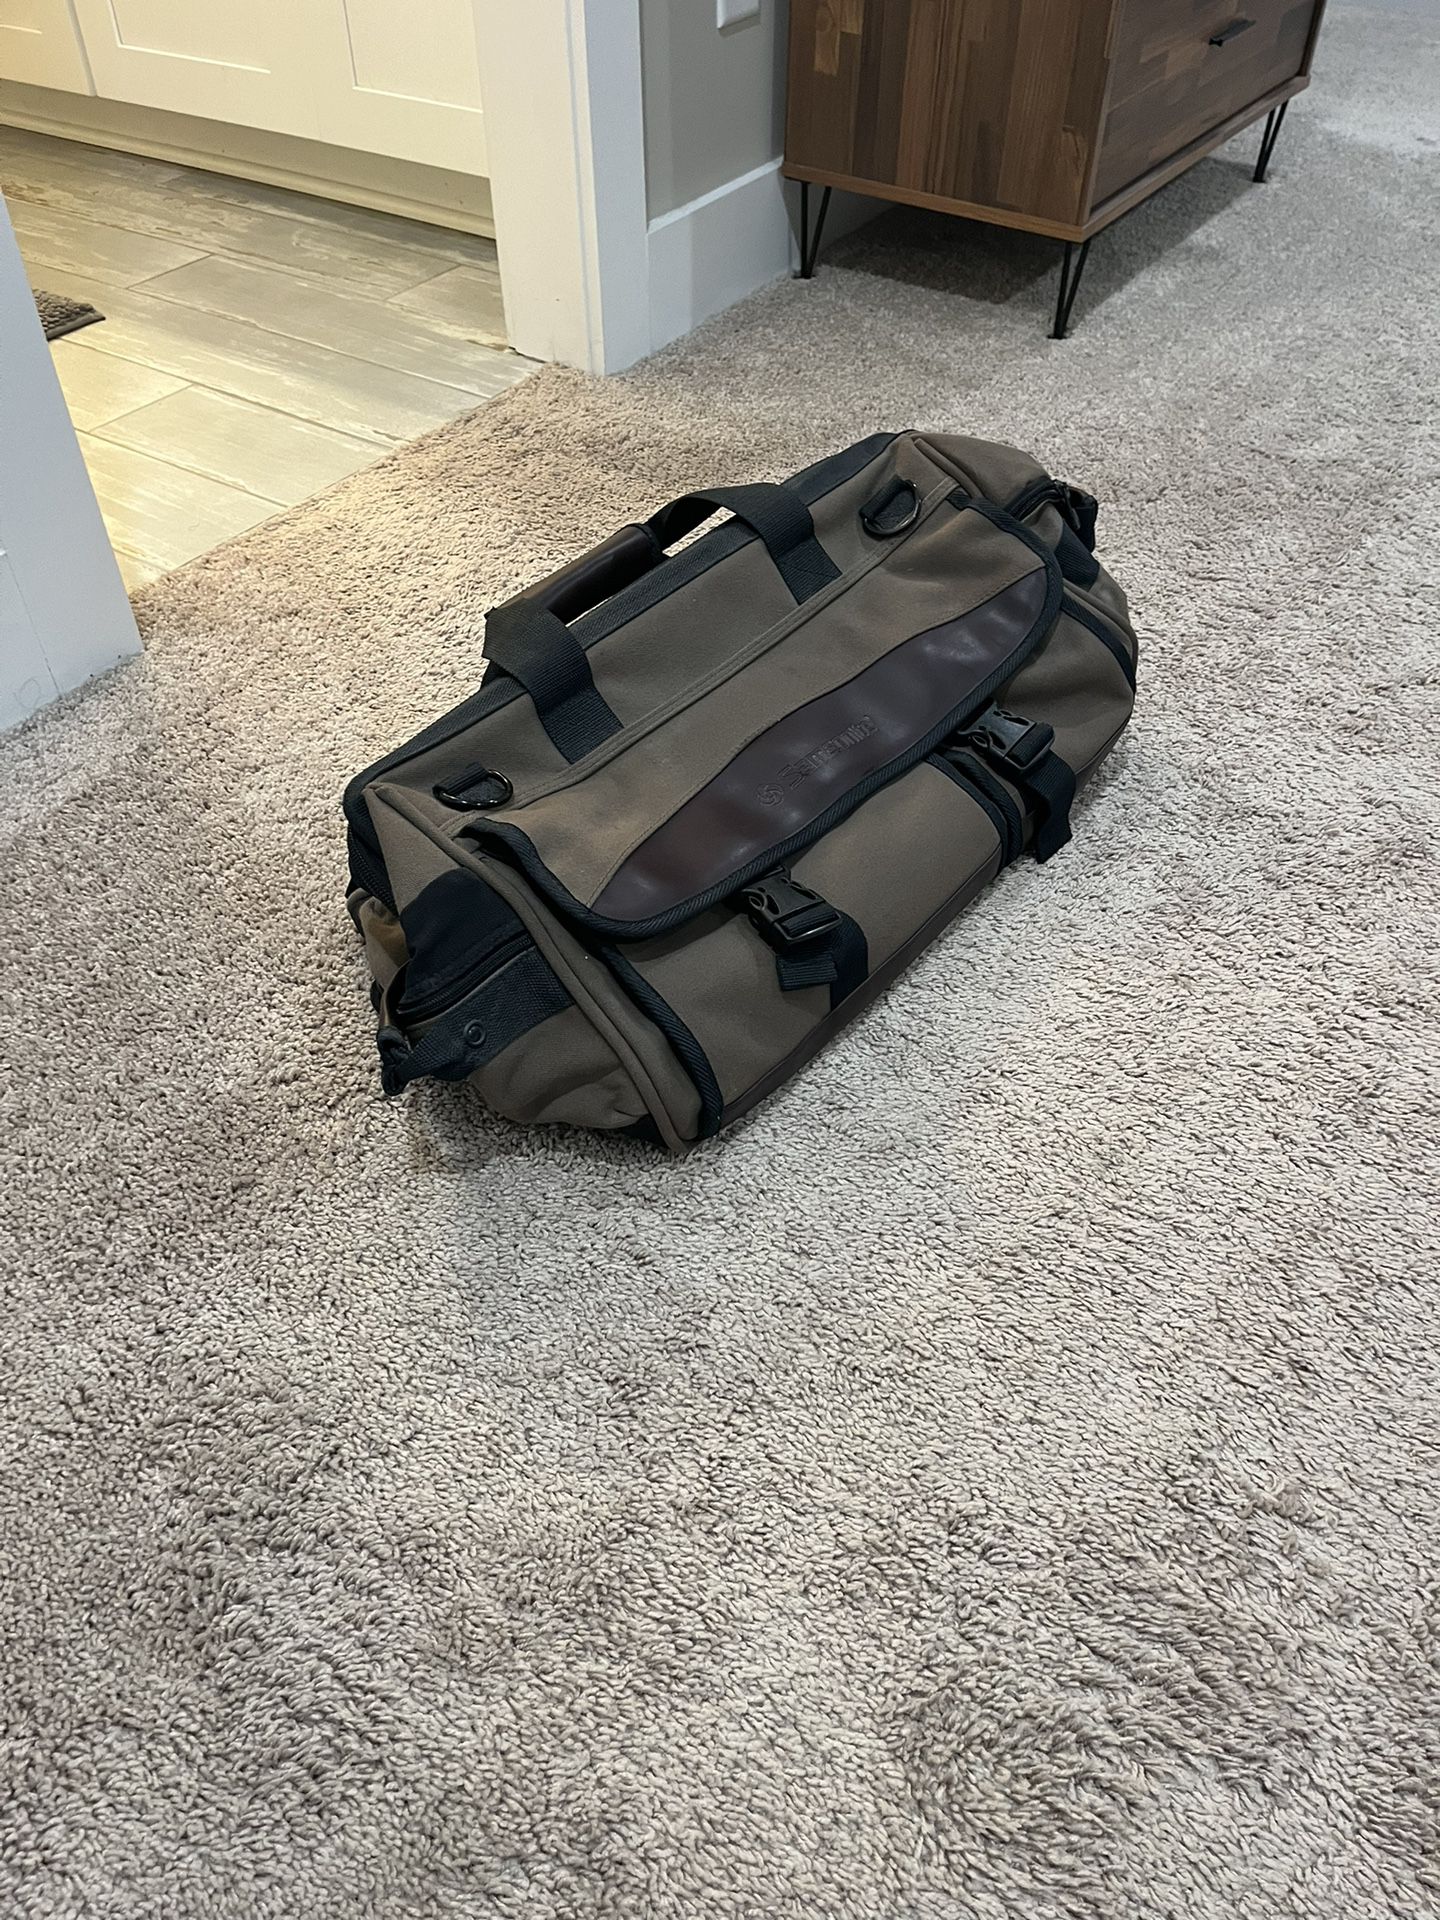 Samsonite Carry On Luggage